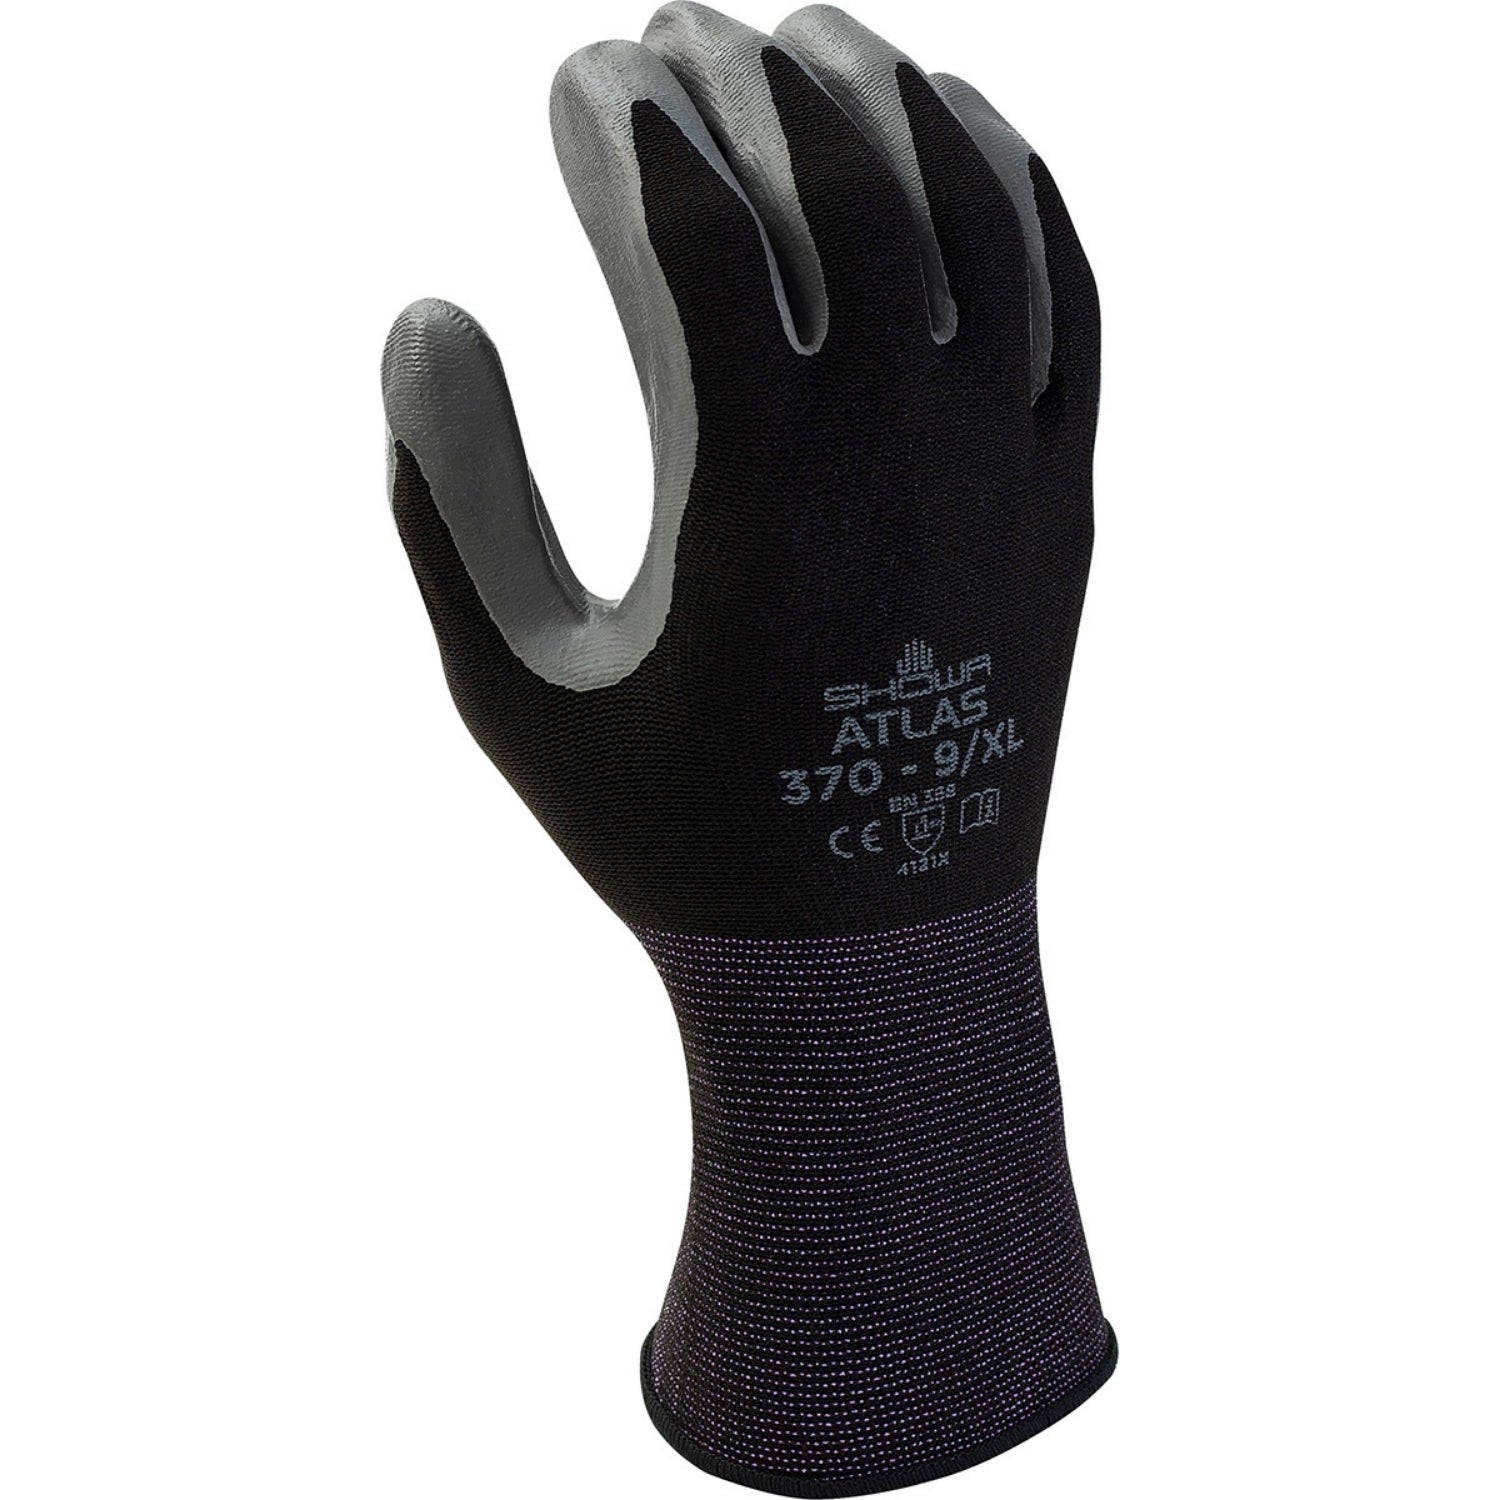 SHOWA 370B - General Purpose Gloves 6 Pack